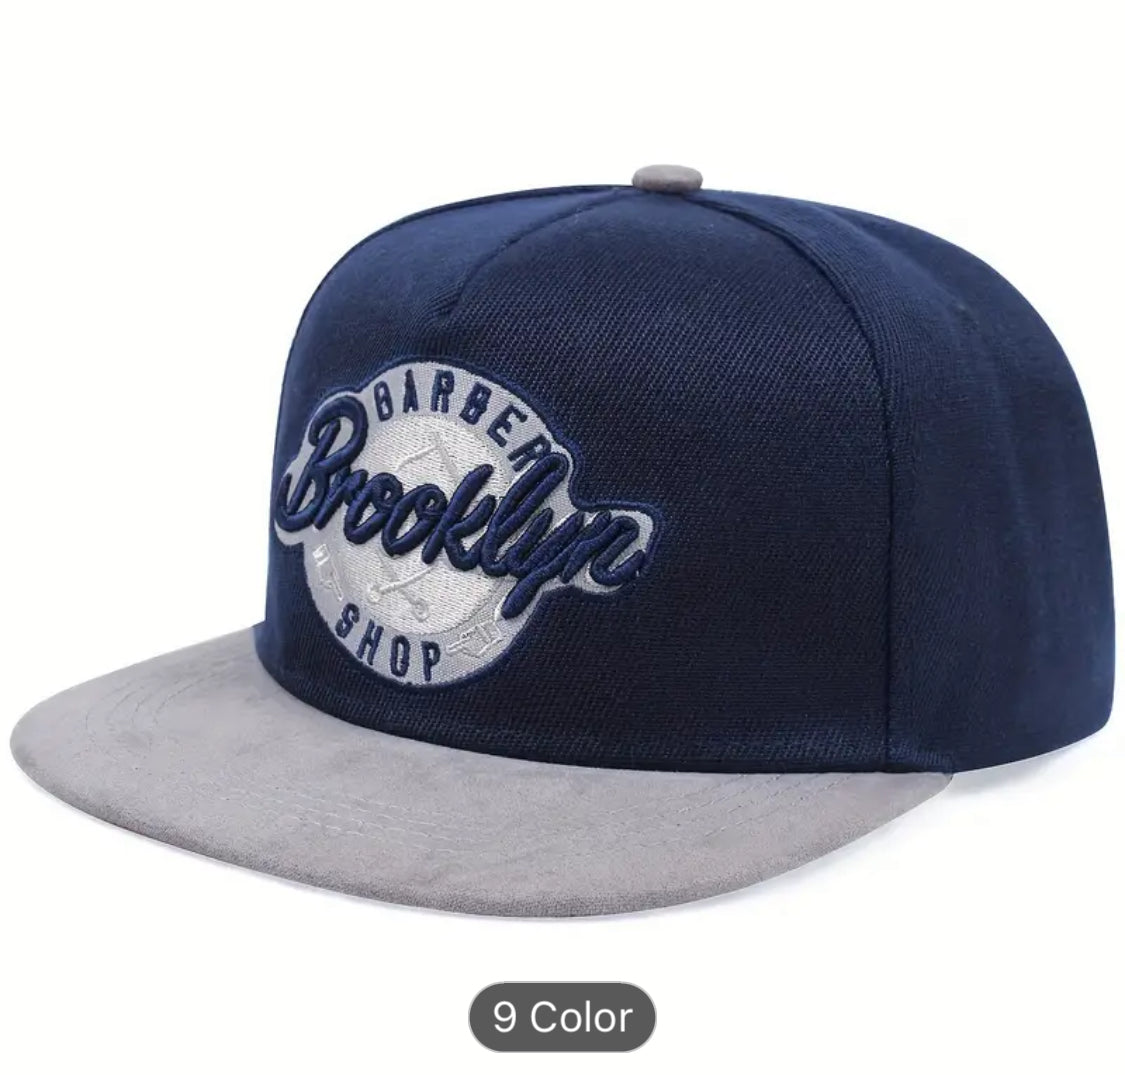 Fitted Cap “Brooklyn “